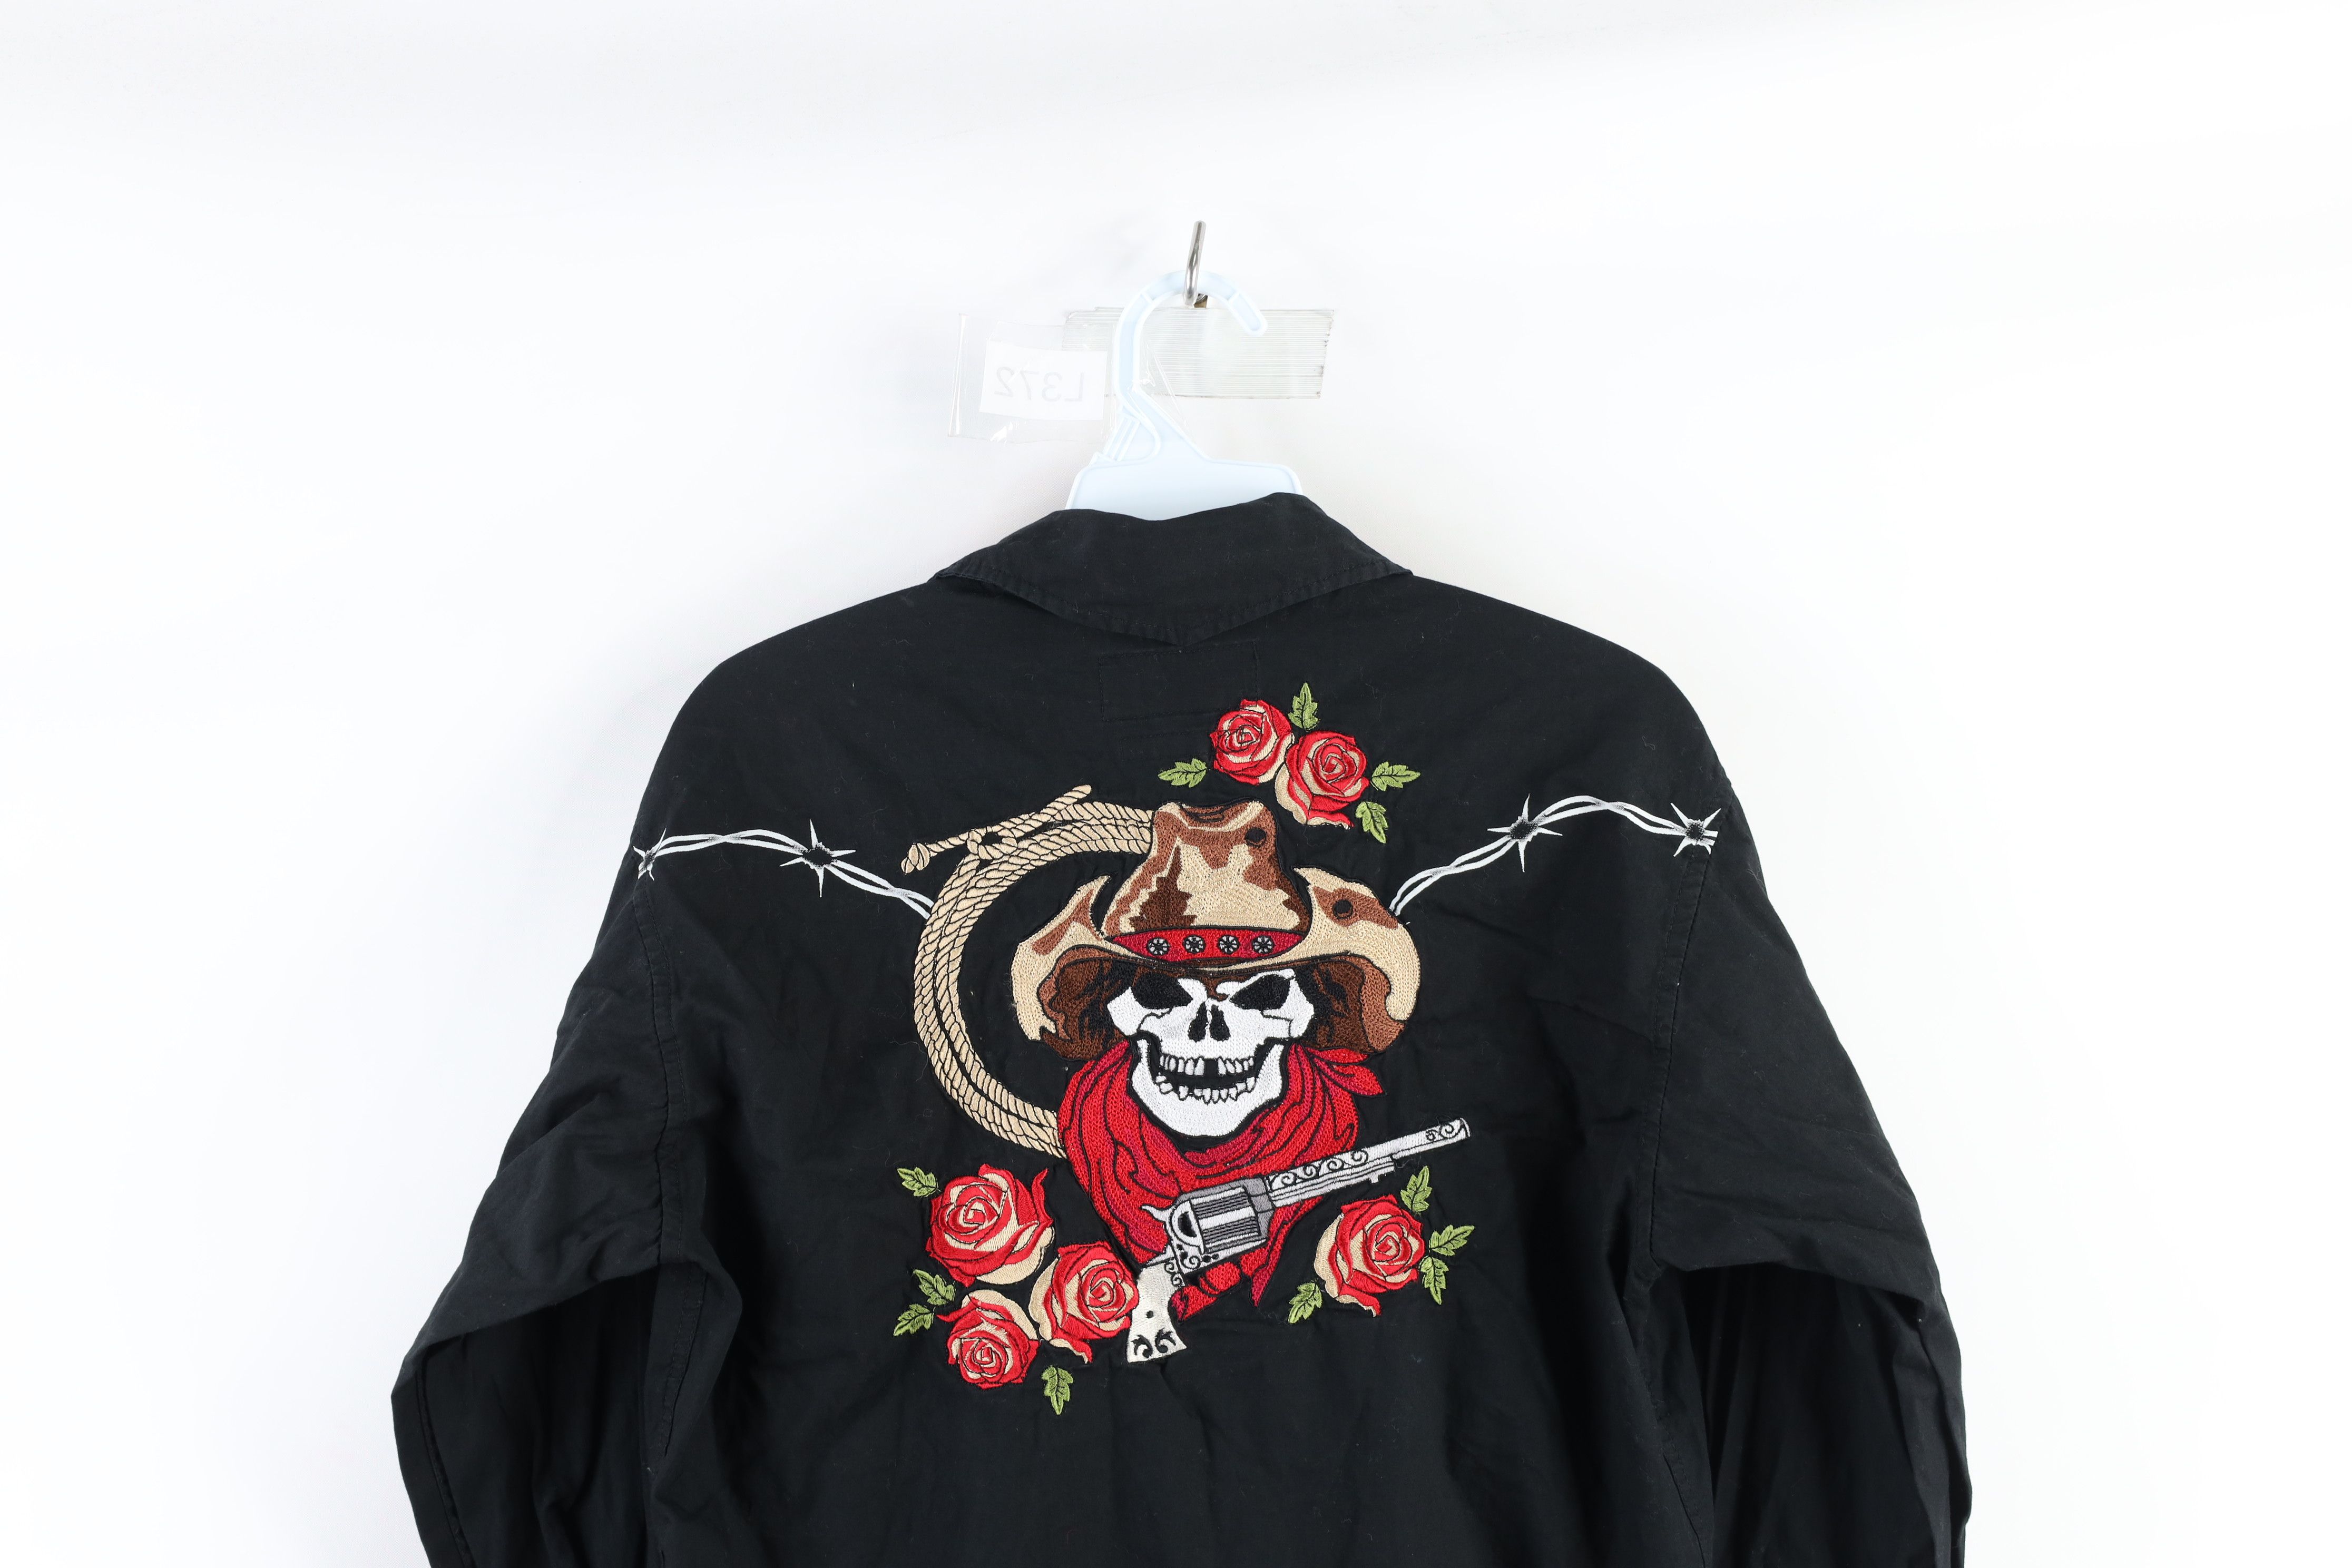 Vintage Vintage Rockabilly Rose Skull Snap Button Shirt Black Size US S / EU 44-46 / 1 - 10 Preview